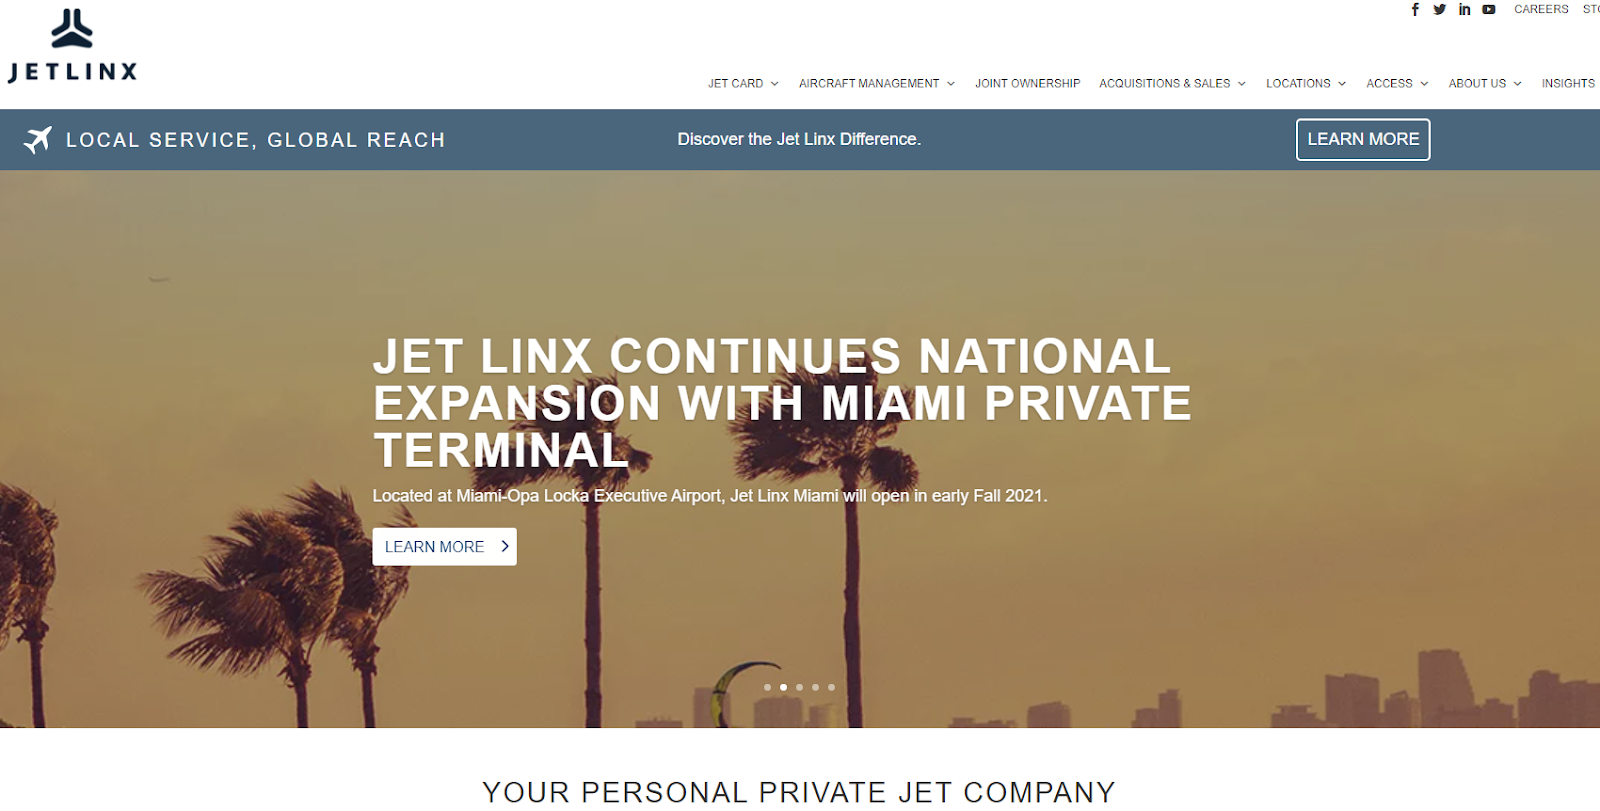 Jet Linx services